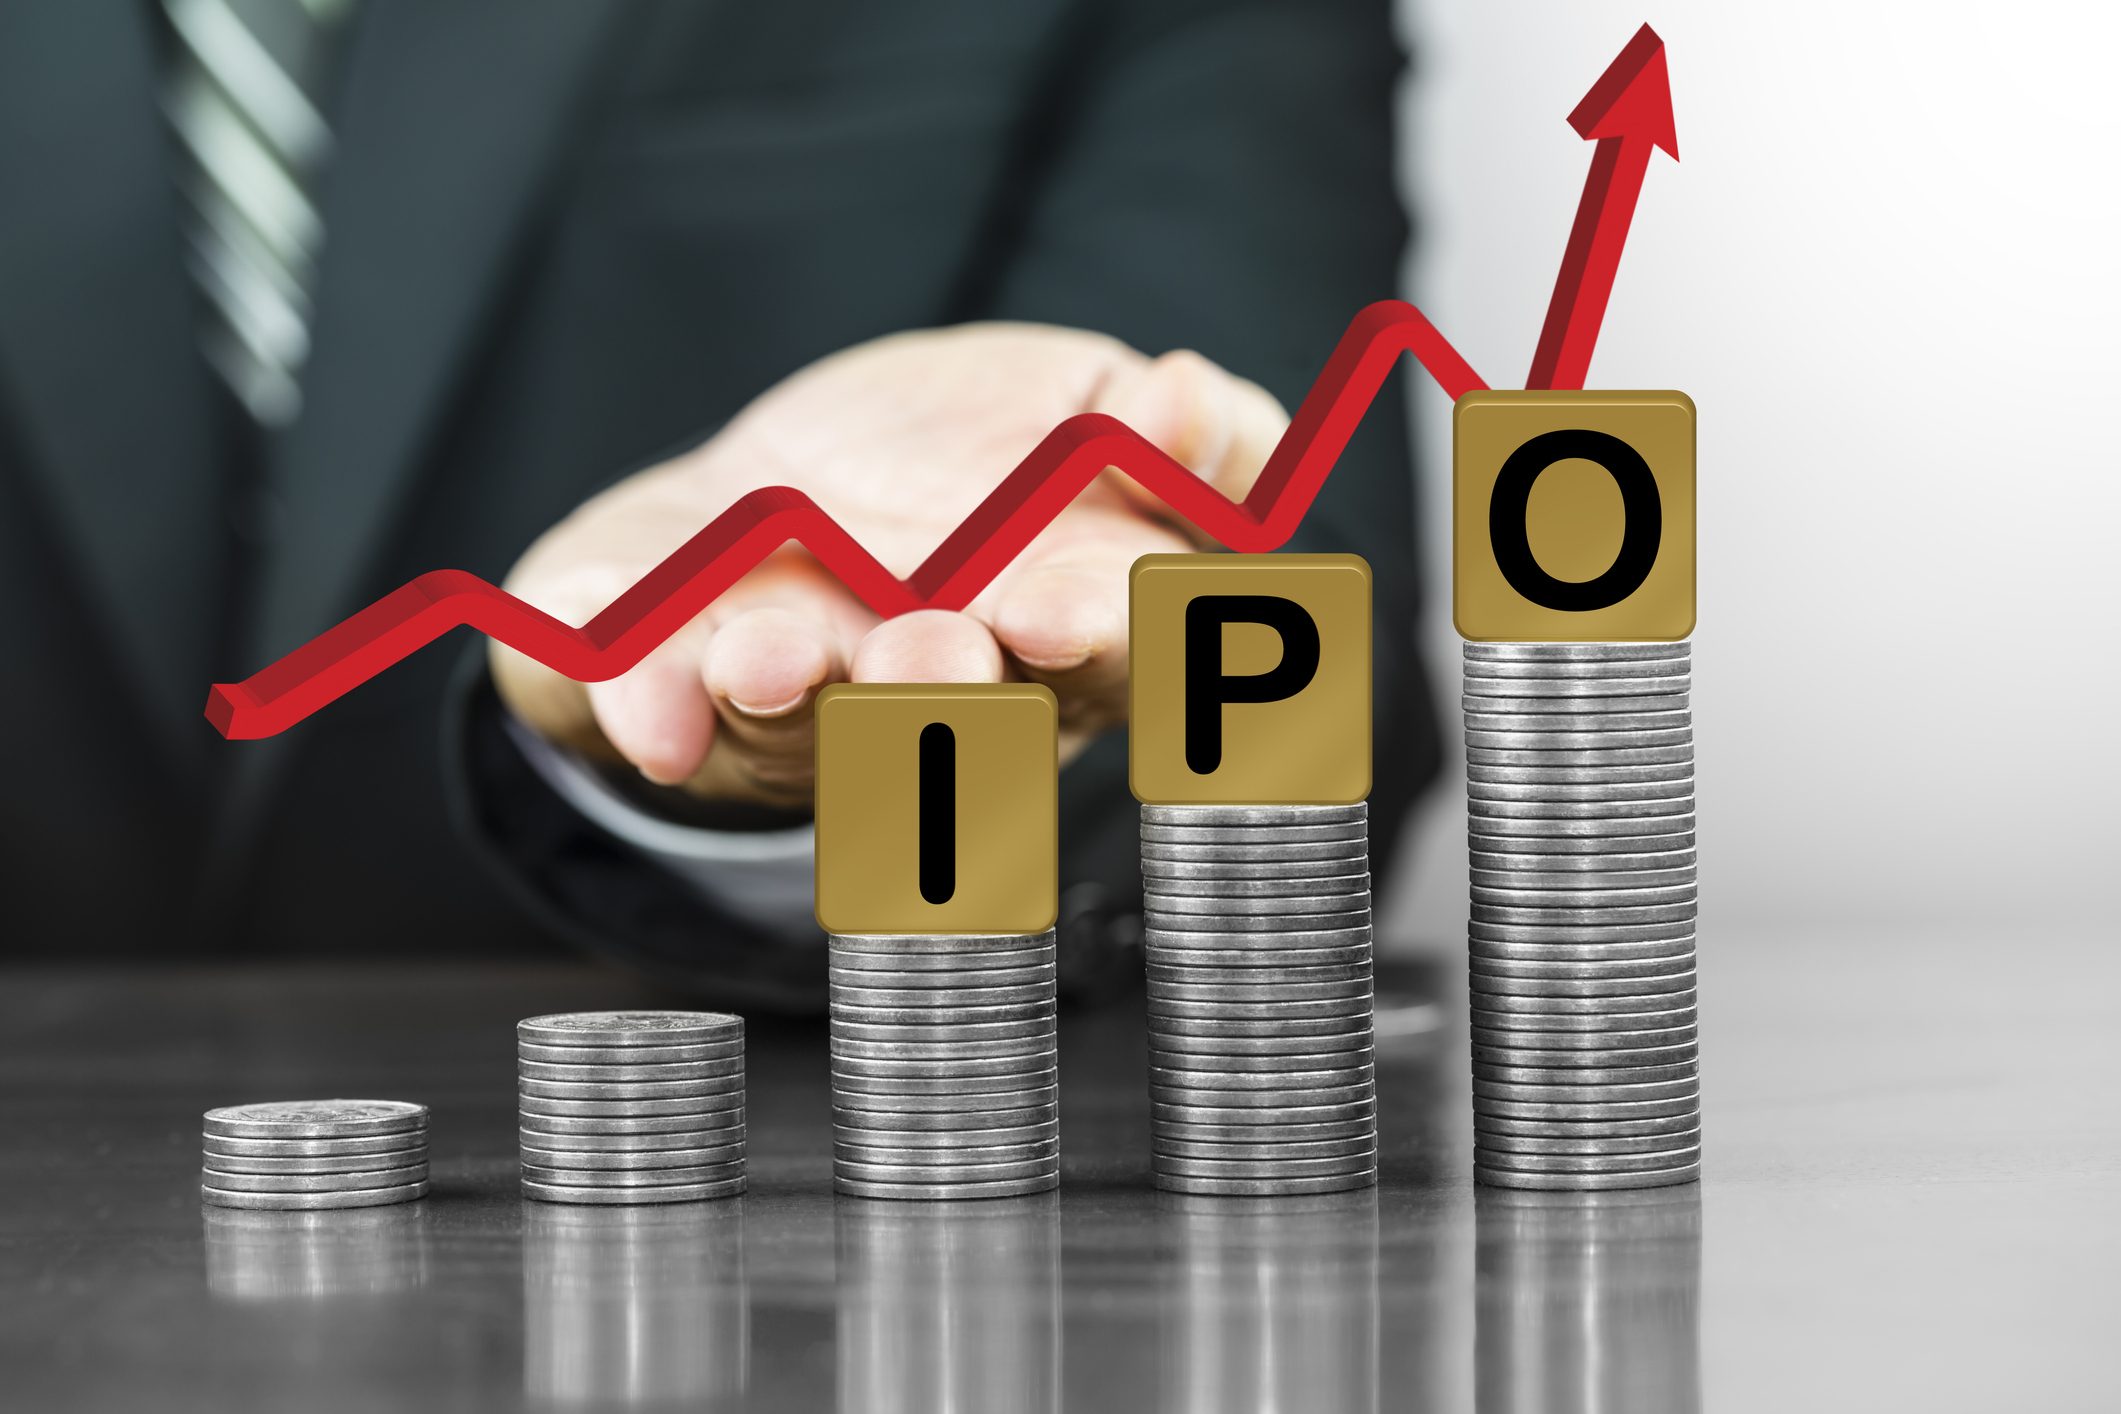 IPO Börsengang